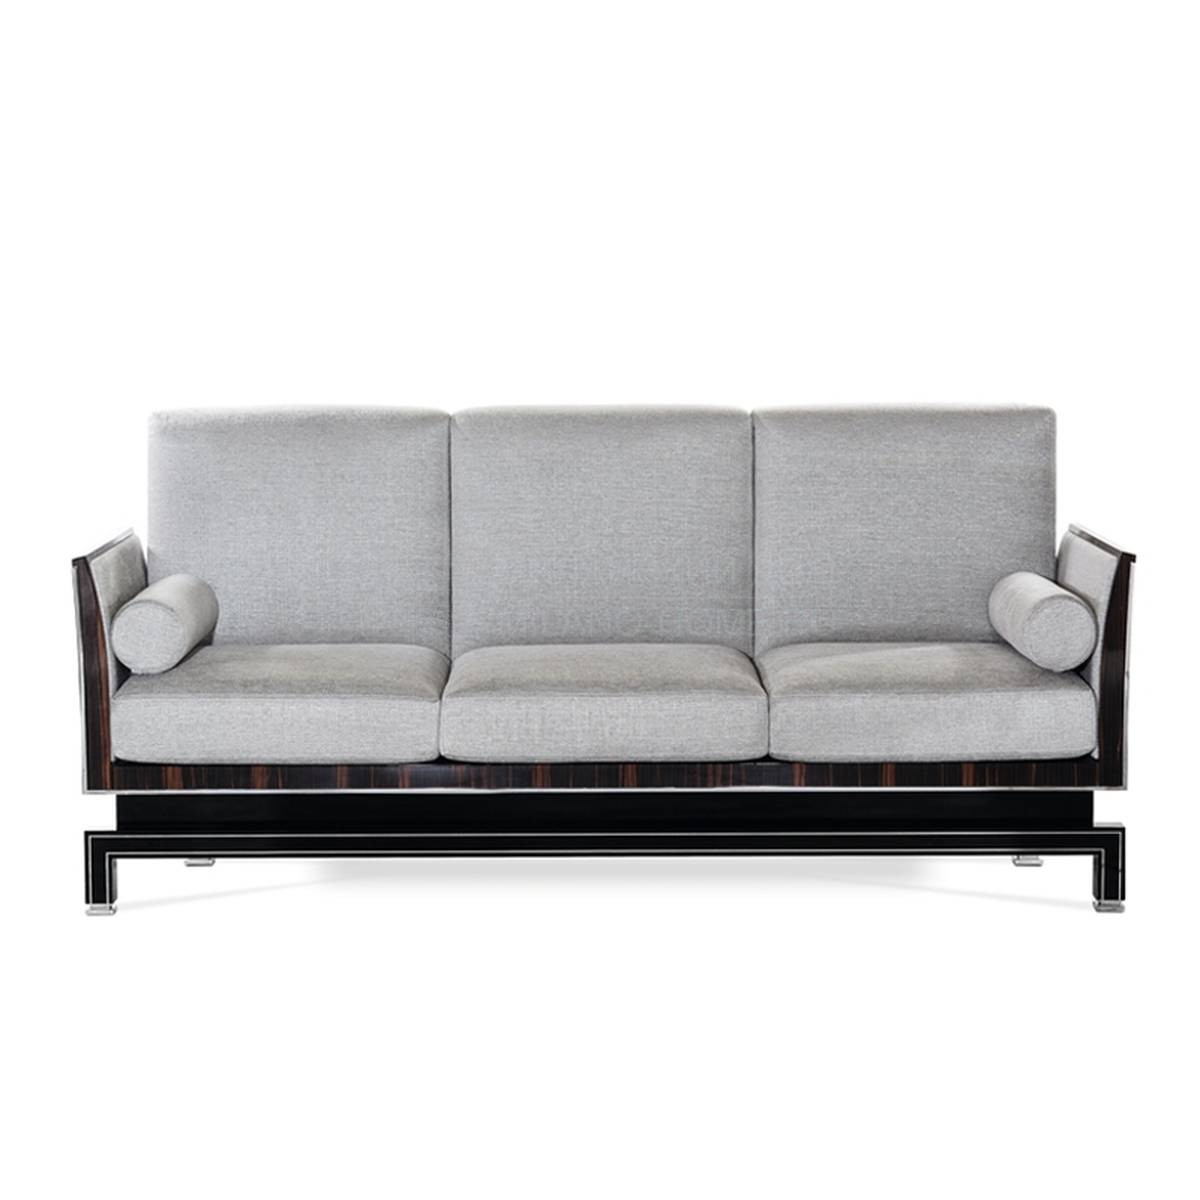 Прямой диван D60/sofa из Италии фабрики ARTE VENEZIANA